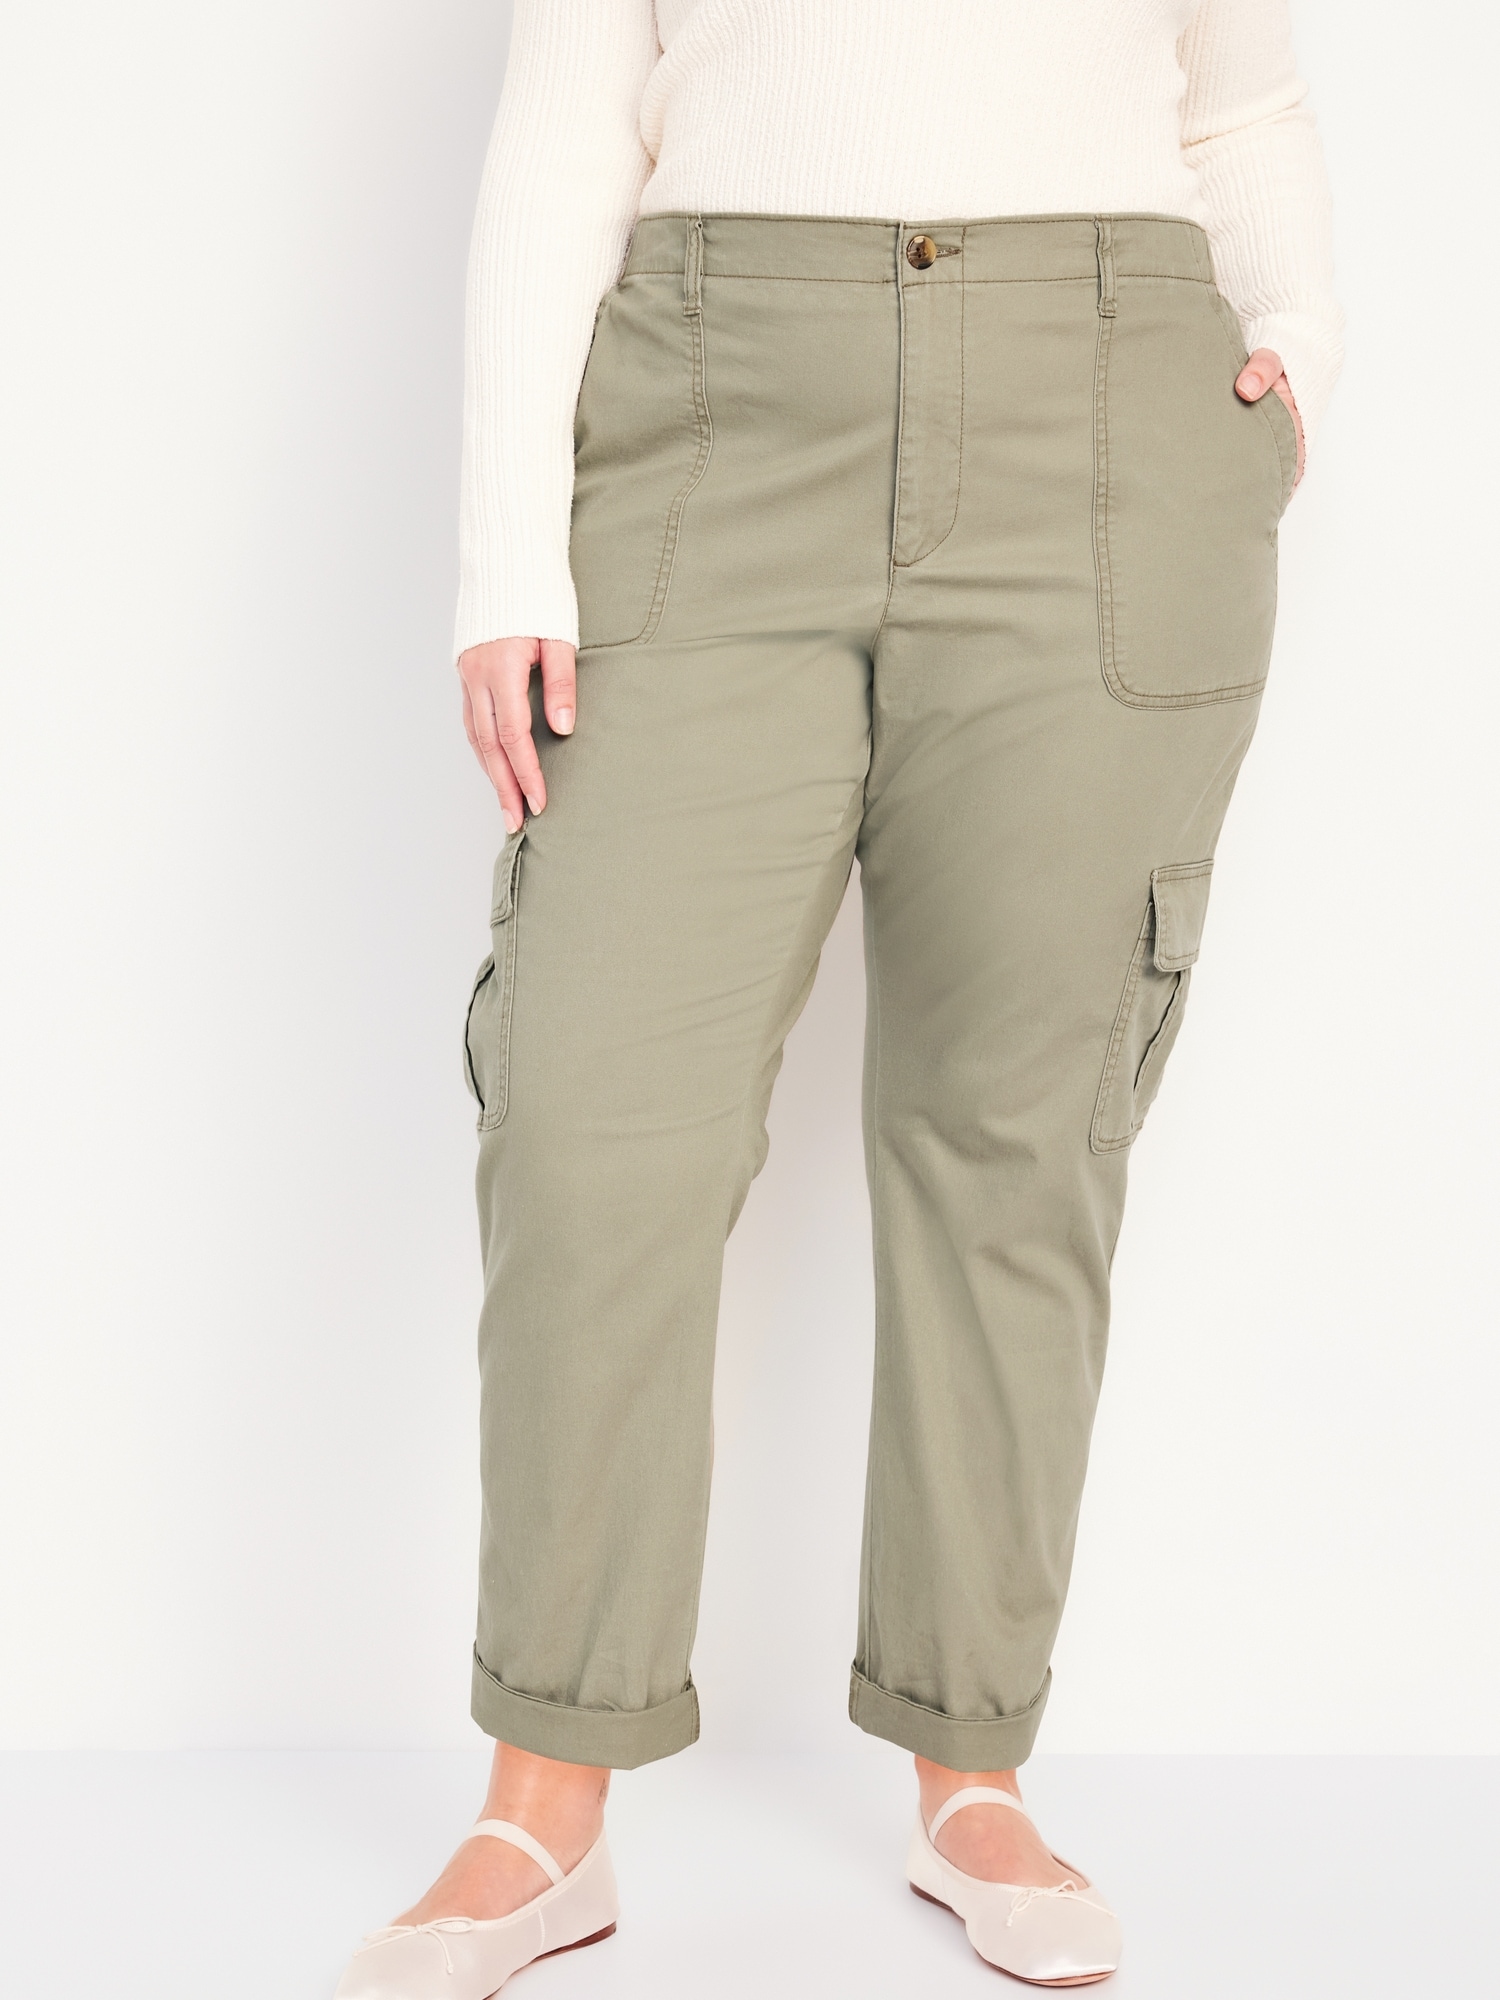 Old Navy Khaki High-Waisted OGC Chino Pants Women's Size Medium